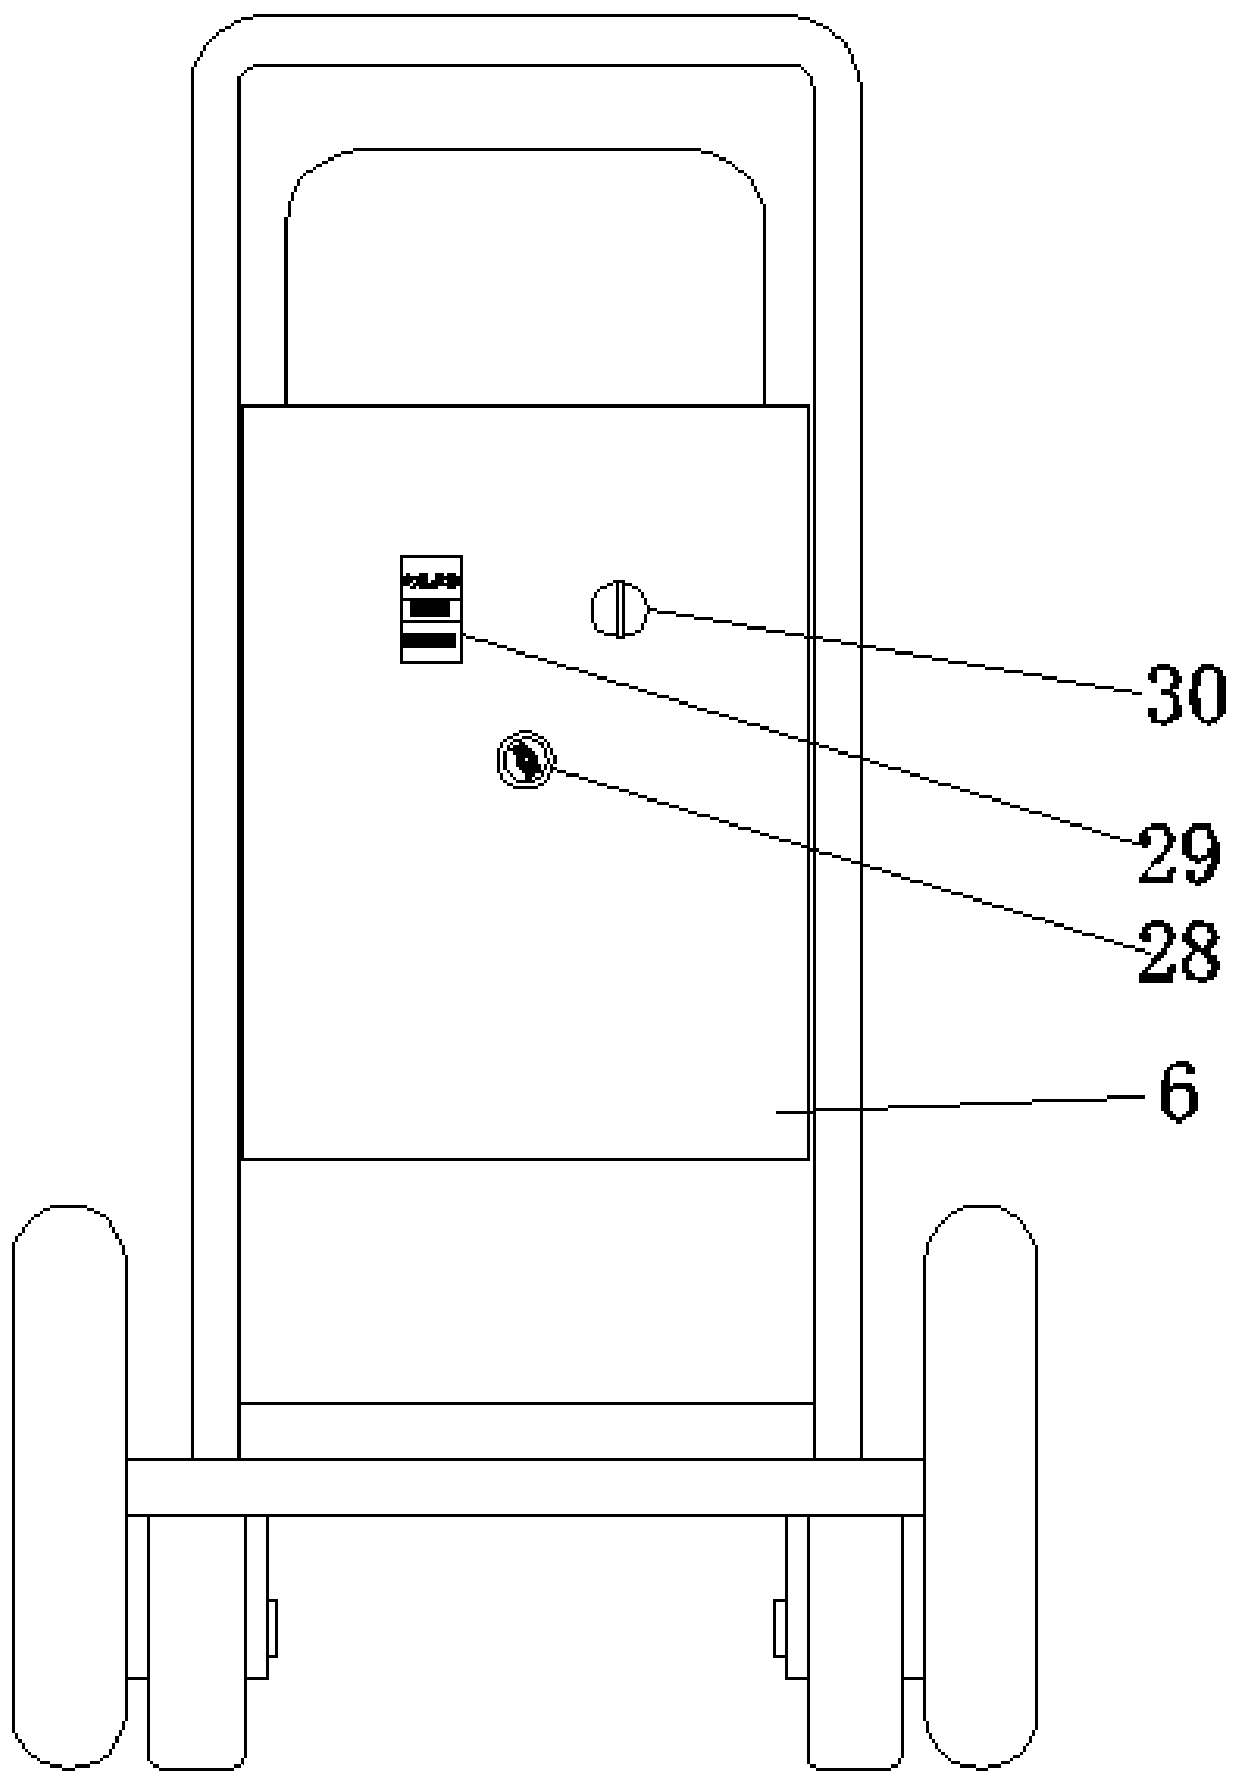 Remote-control sliding-type pulp distributor